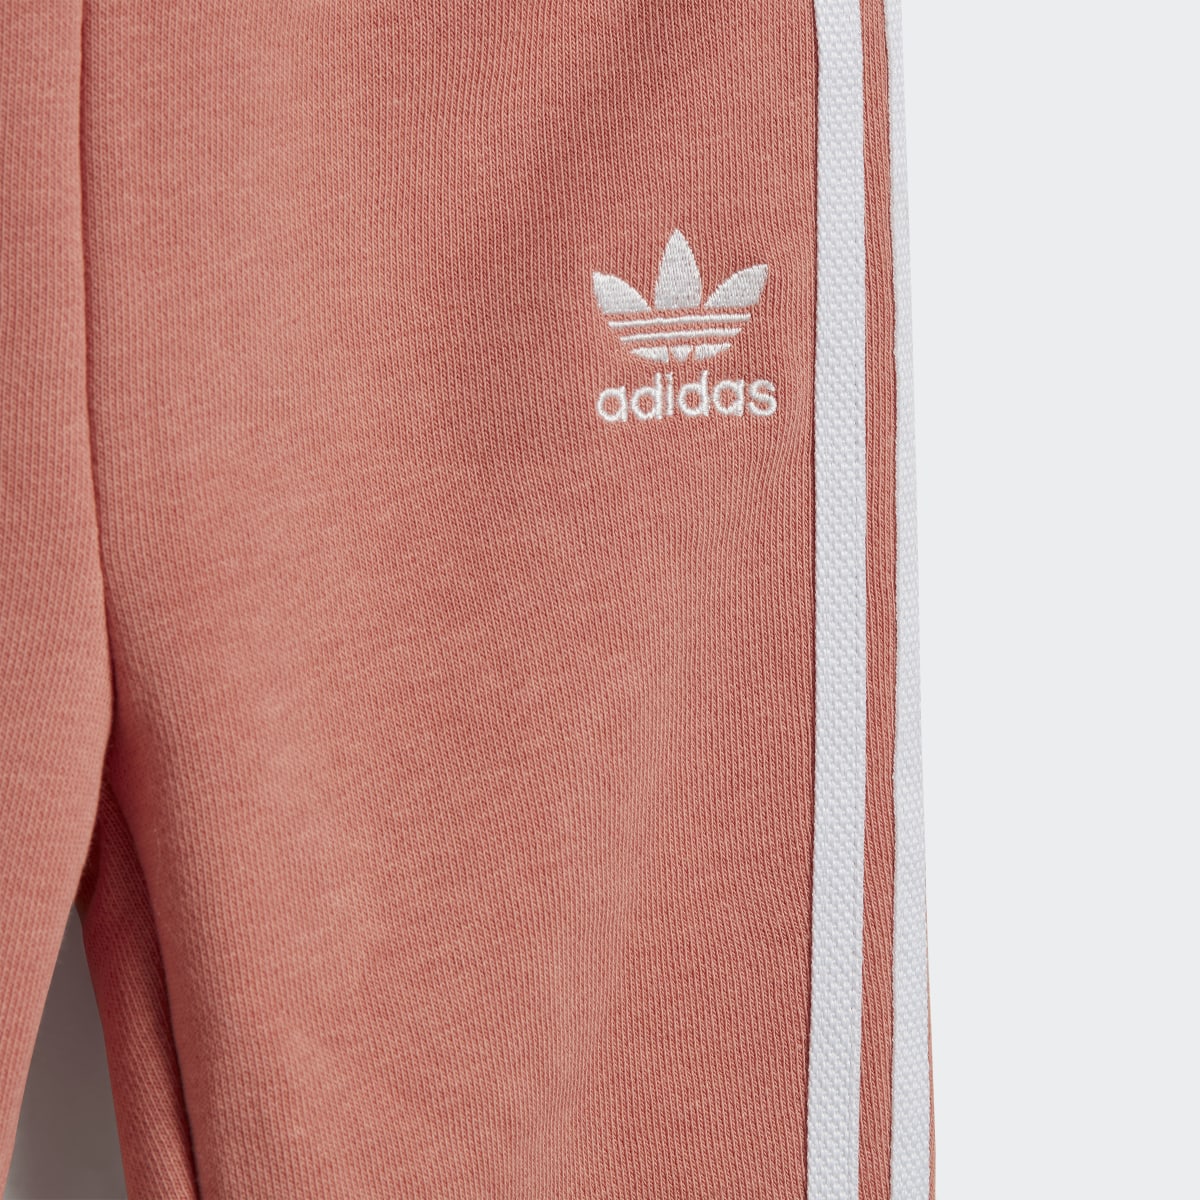 Adidas Animal Allover Print Sweatshirt und Hose Set. 9